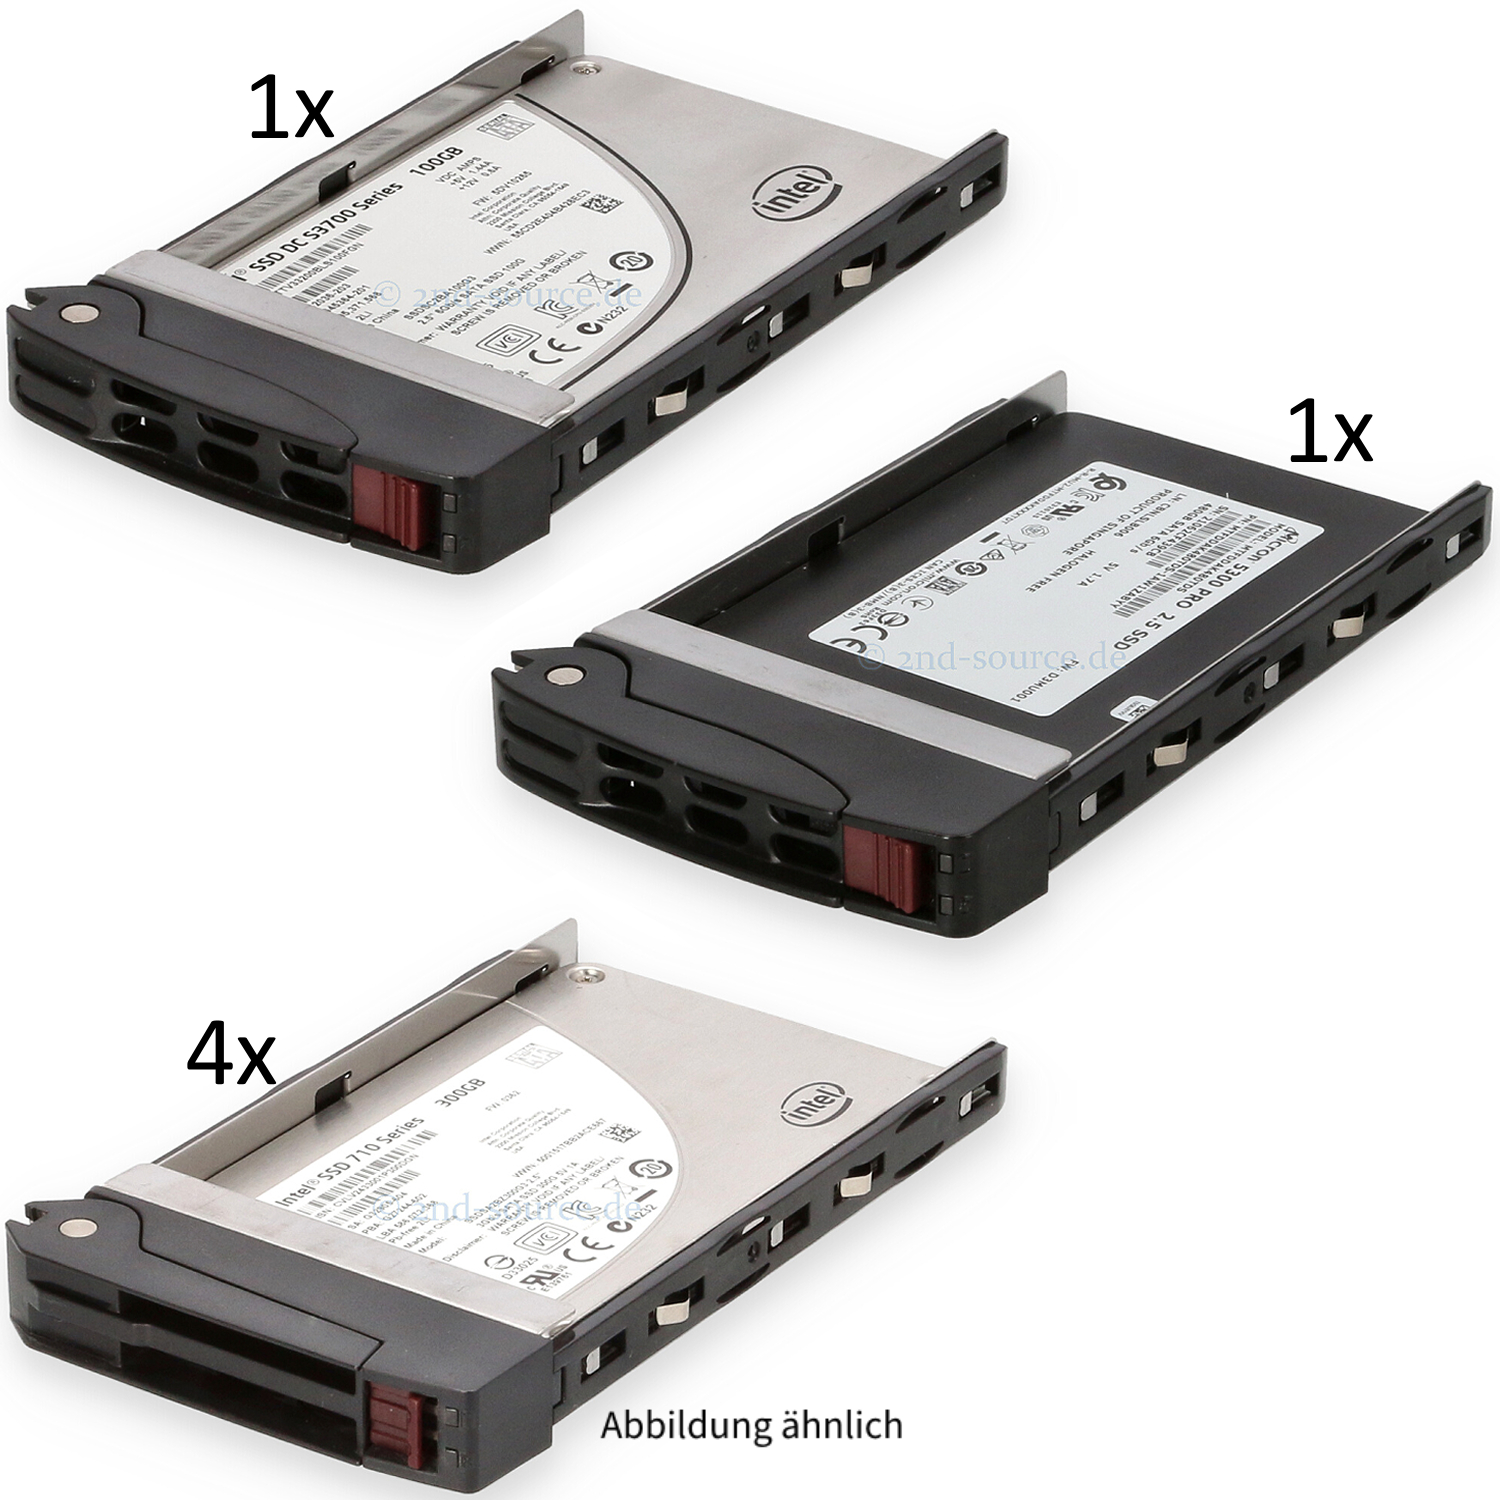 Supermicro Bundle mit diversen SSDs